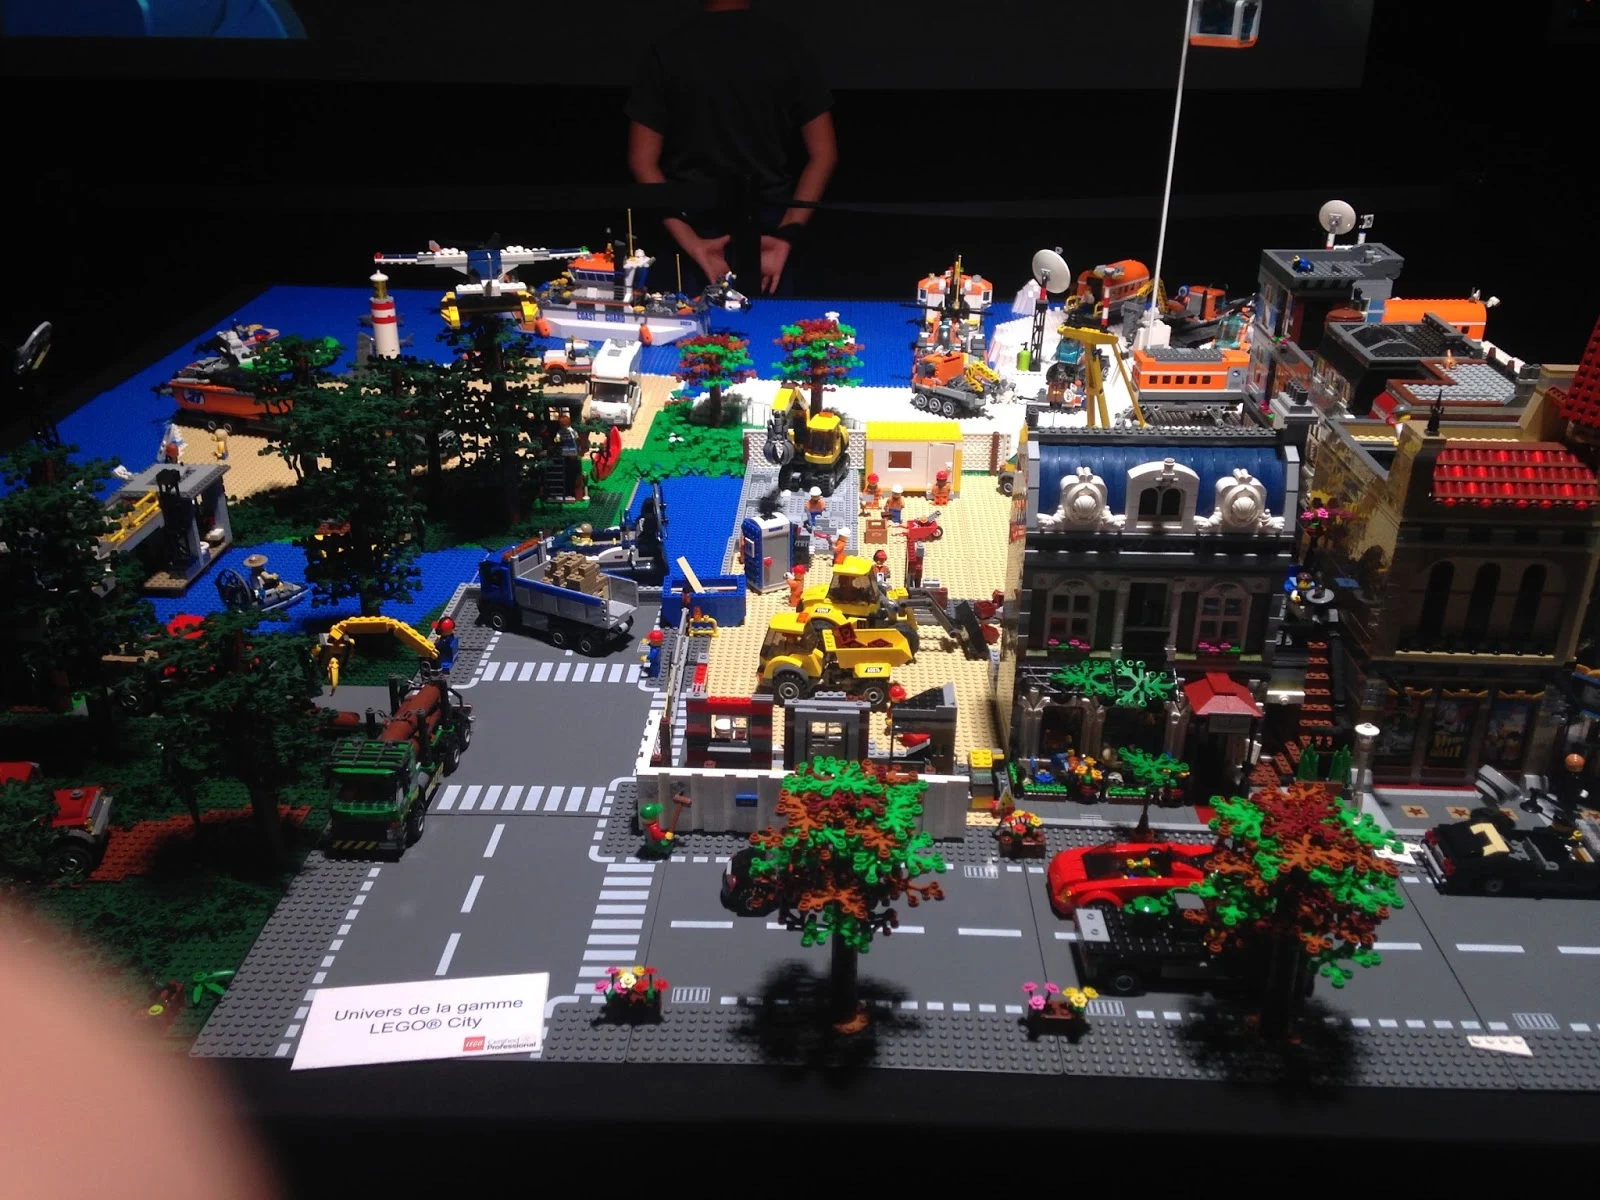 Univers de la gamme Lego City